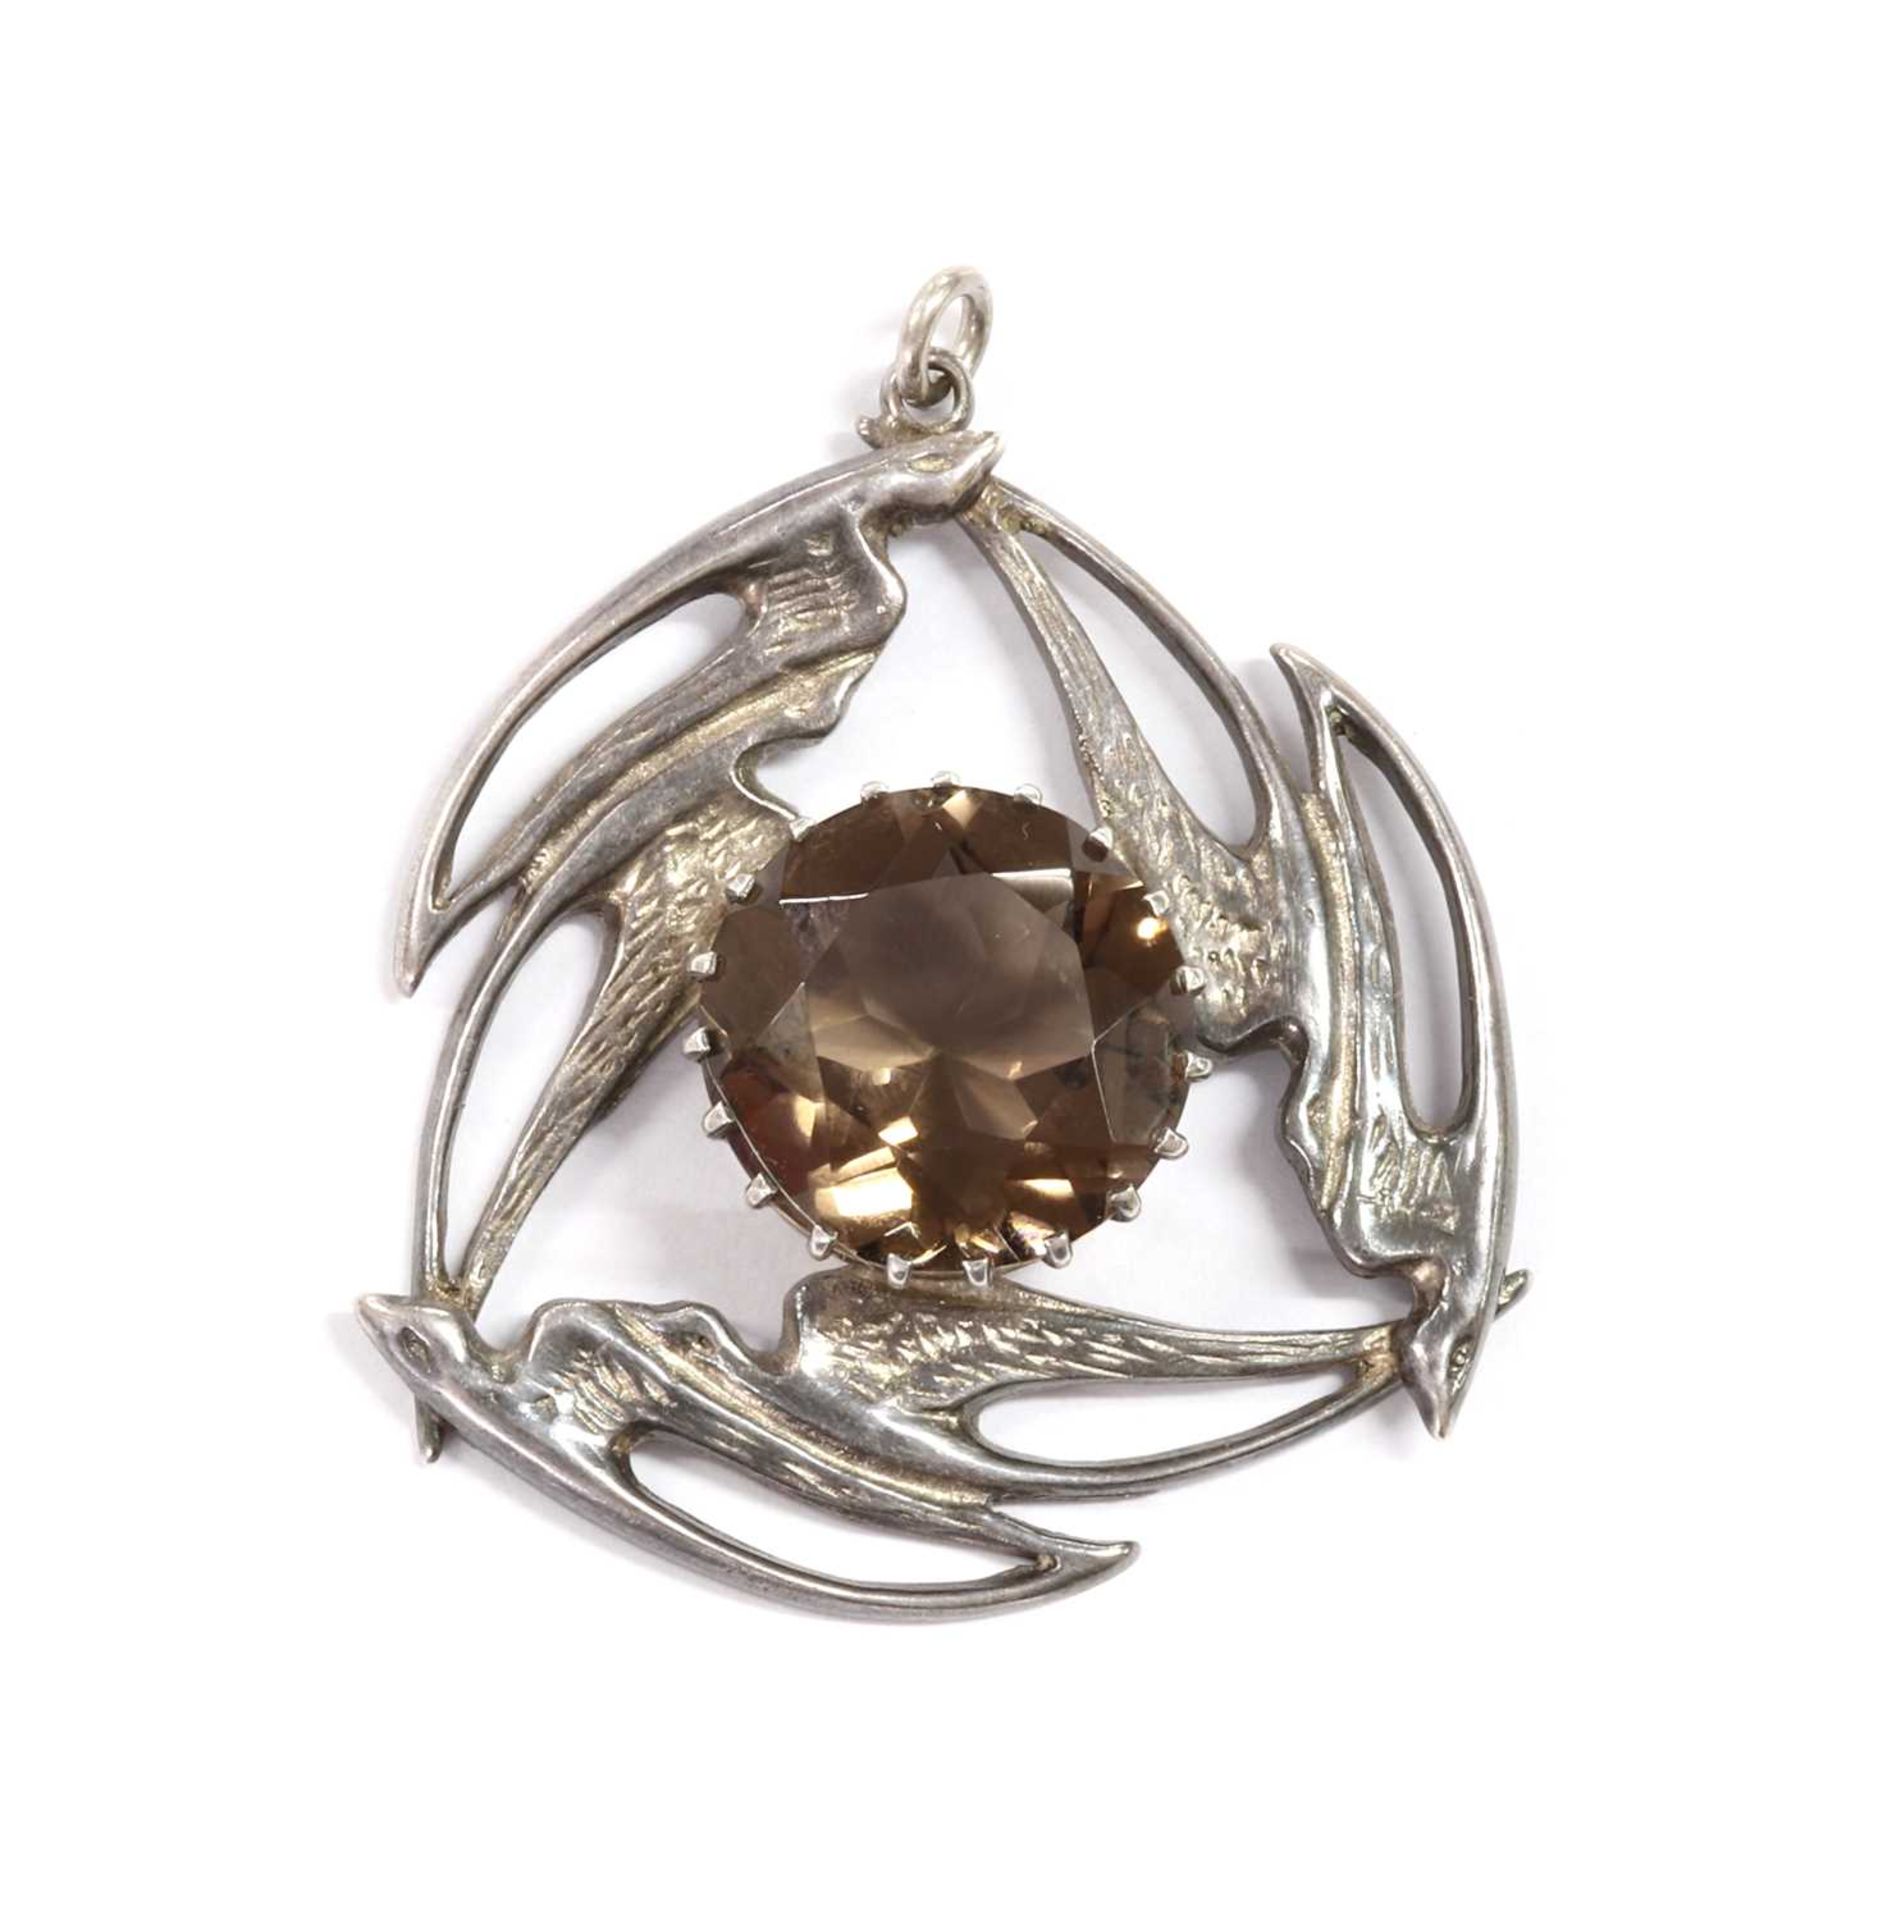 A Scottish sterling silver smoky quartz pendant,